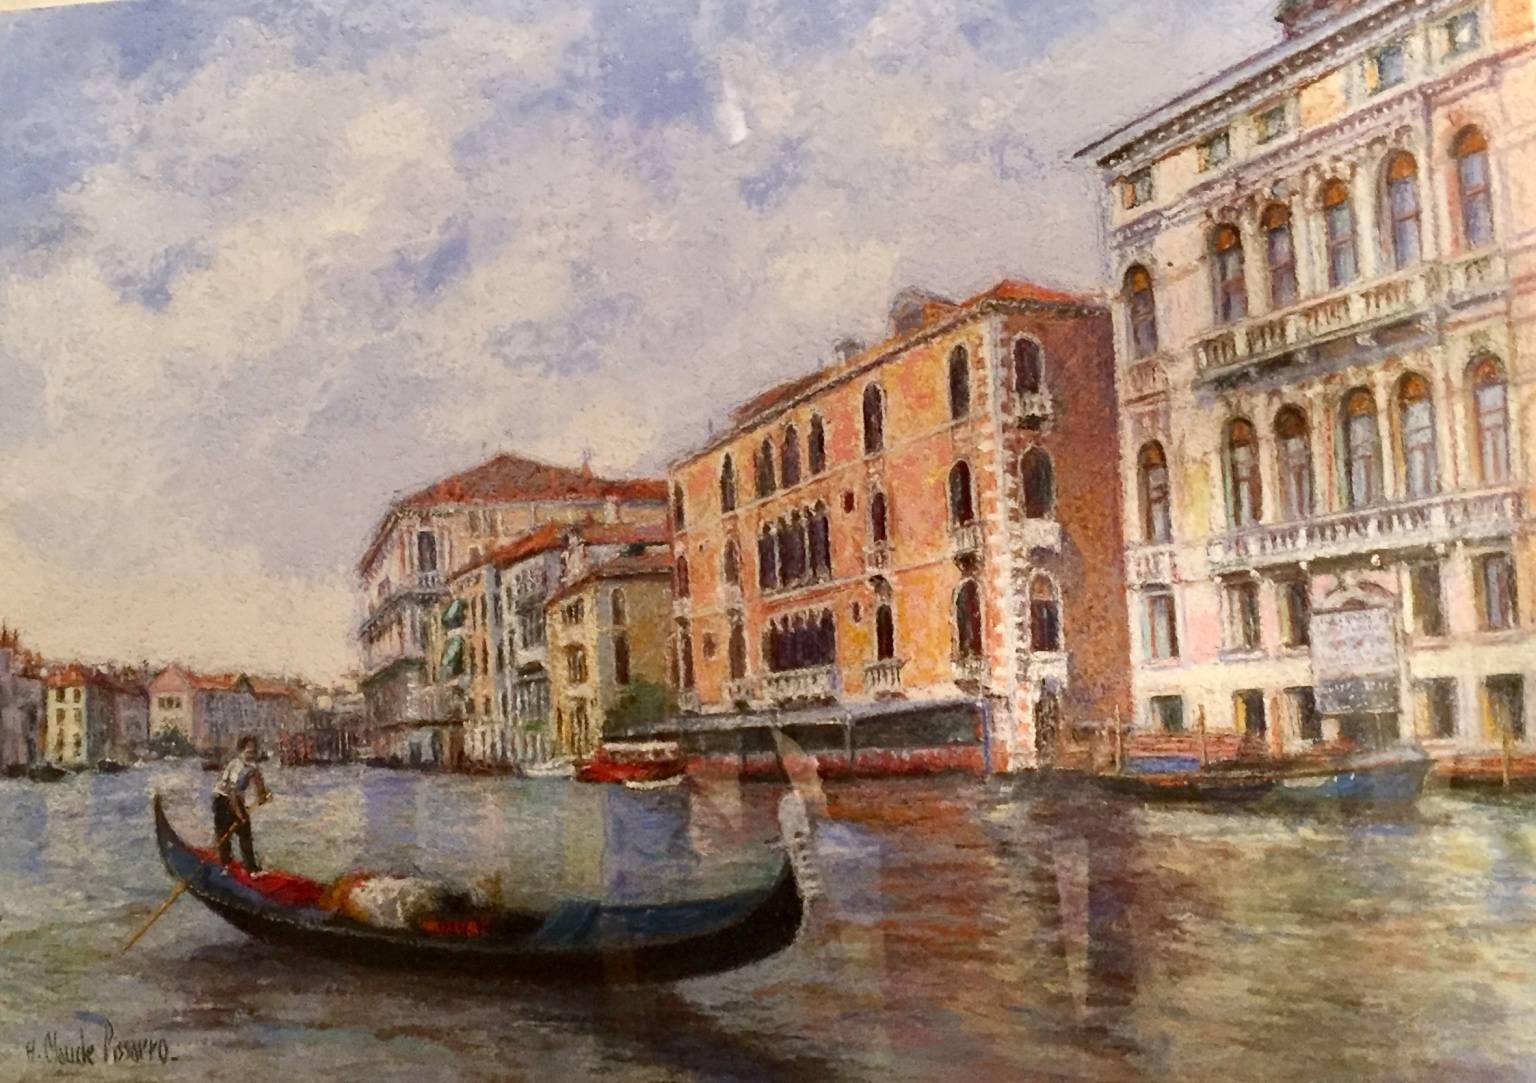 Le Palais Frapino, Venice - Painting by Hughes Claude Pissarro